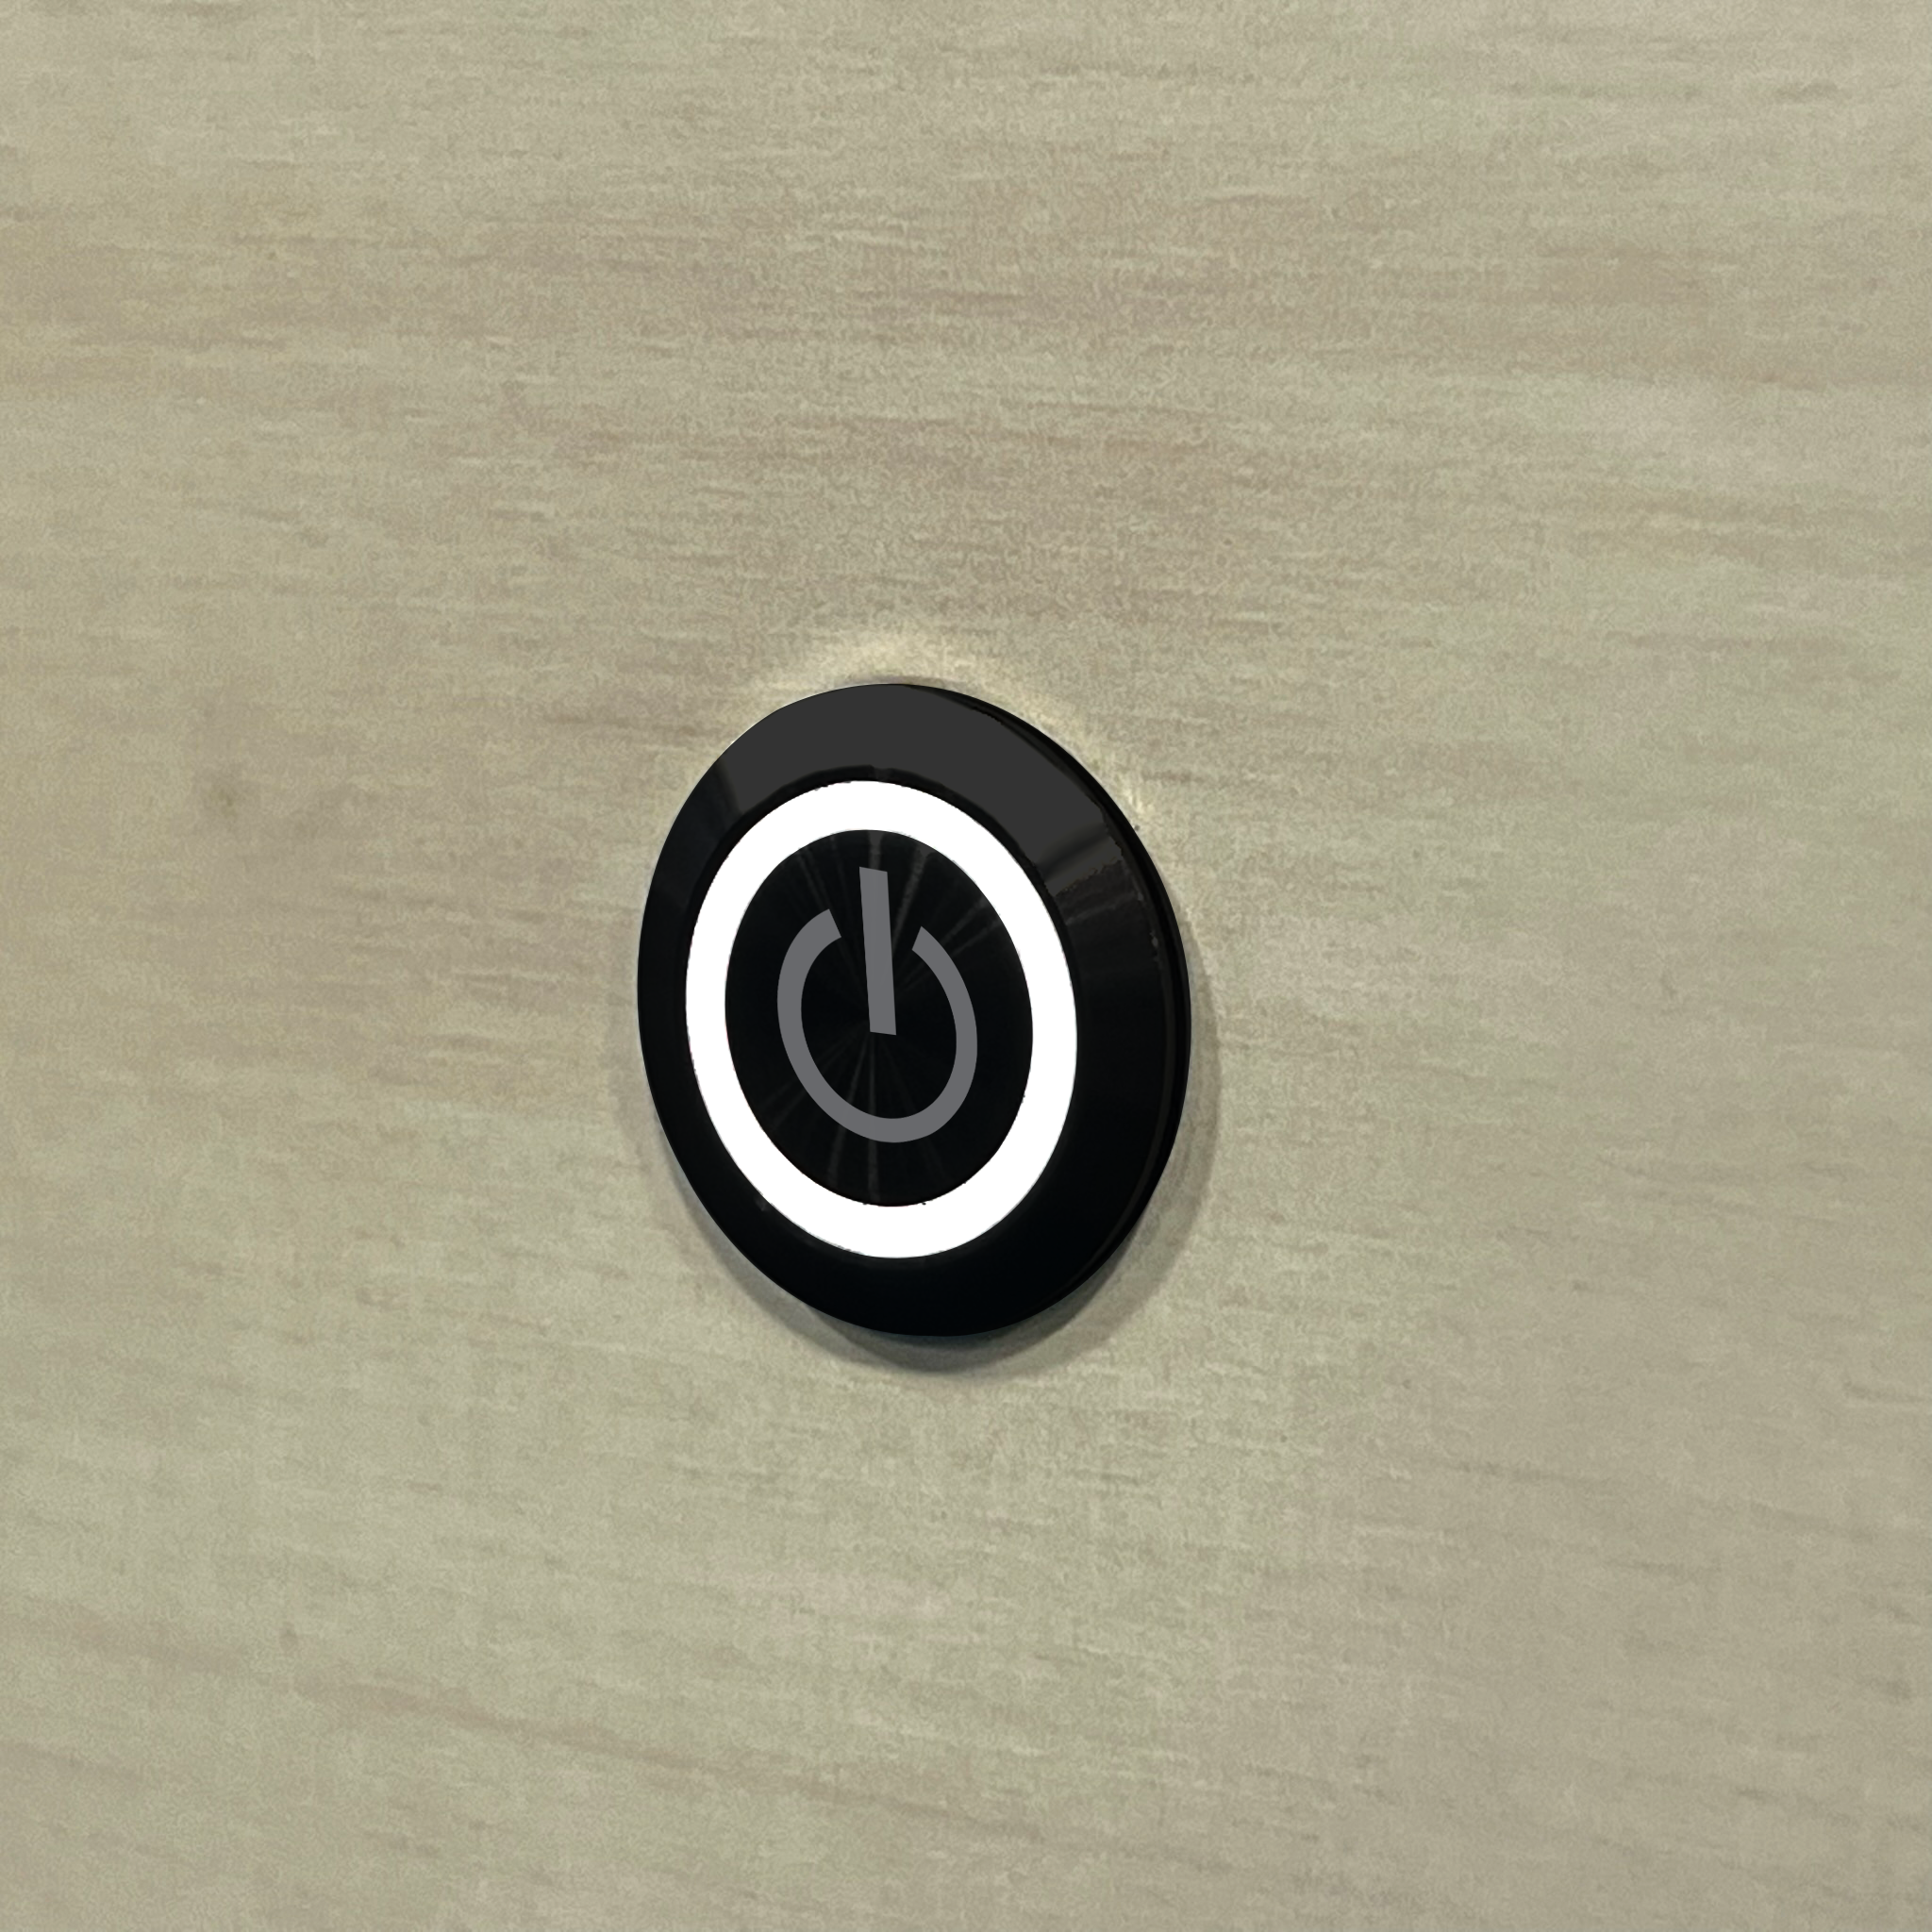 Black Power Button with White Illumination Installed